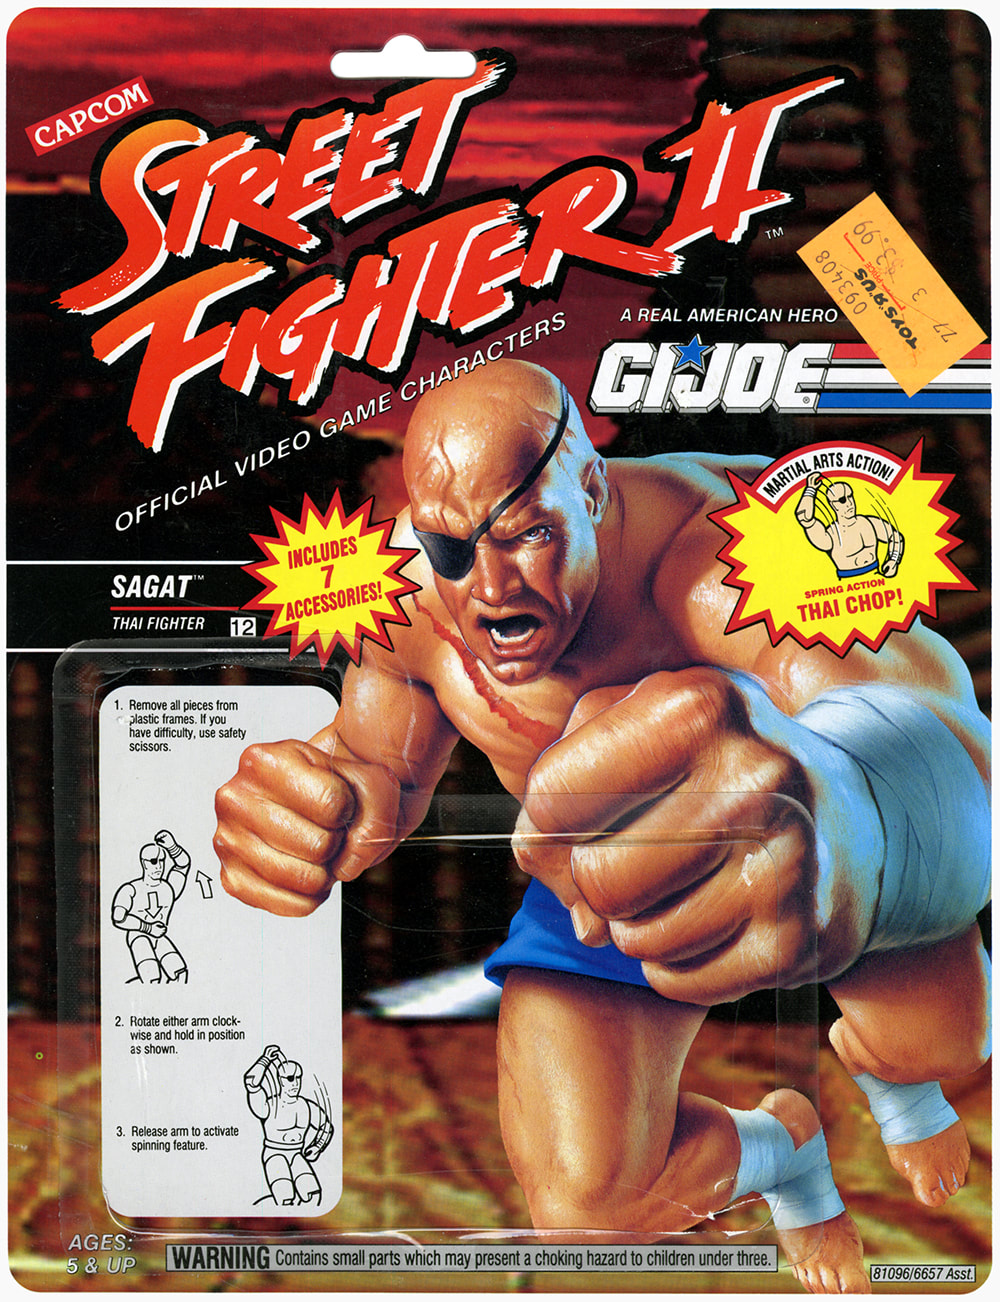 1993 Hasbro G.I. Joe Carded Action Figure - Capcom Street Fighter II Vega